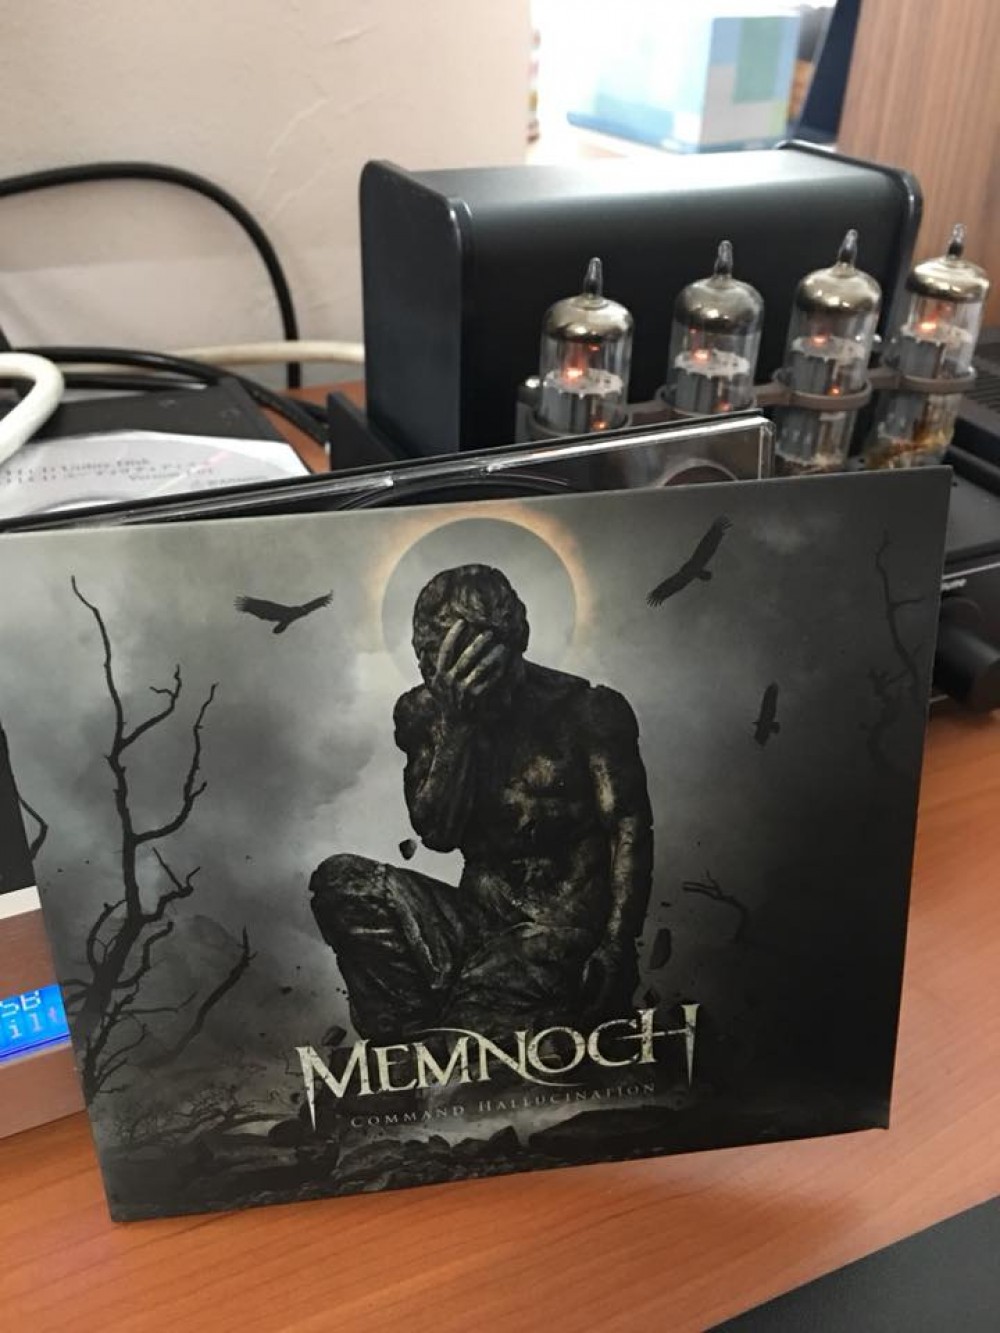 Memnoch - Command Hallucination CD Photo